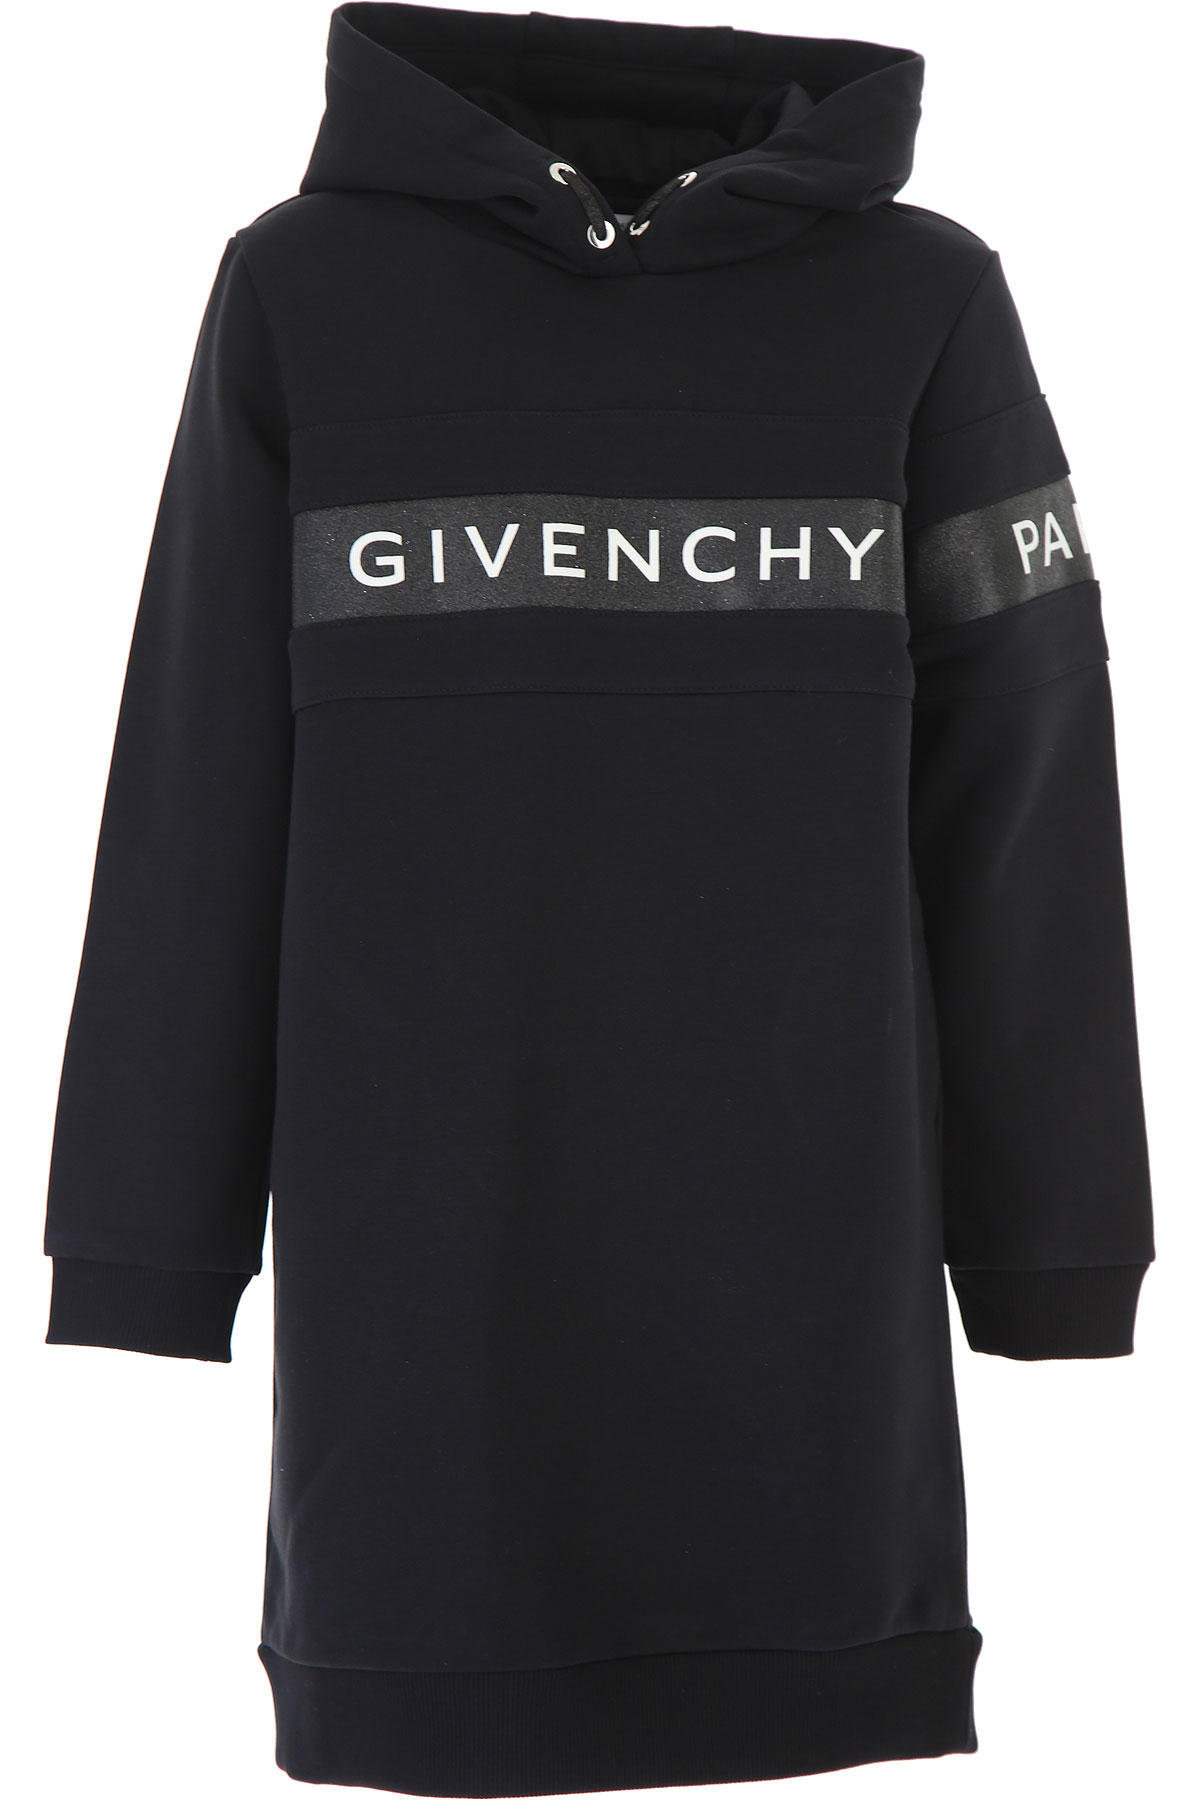 Givenchy Kleid für Mädchen, Schwarz, Baumwolle, 2017, 10Y 4Y 6Y 8Y